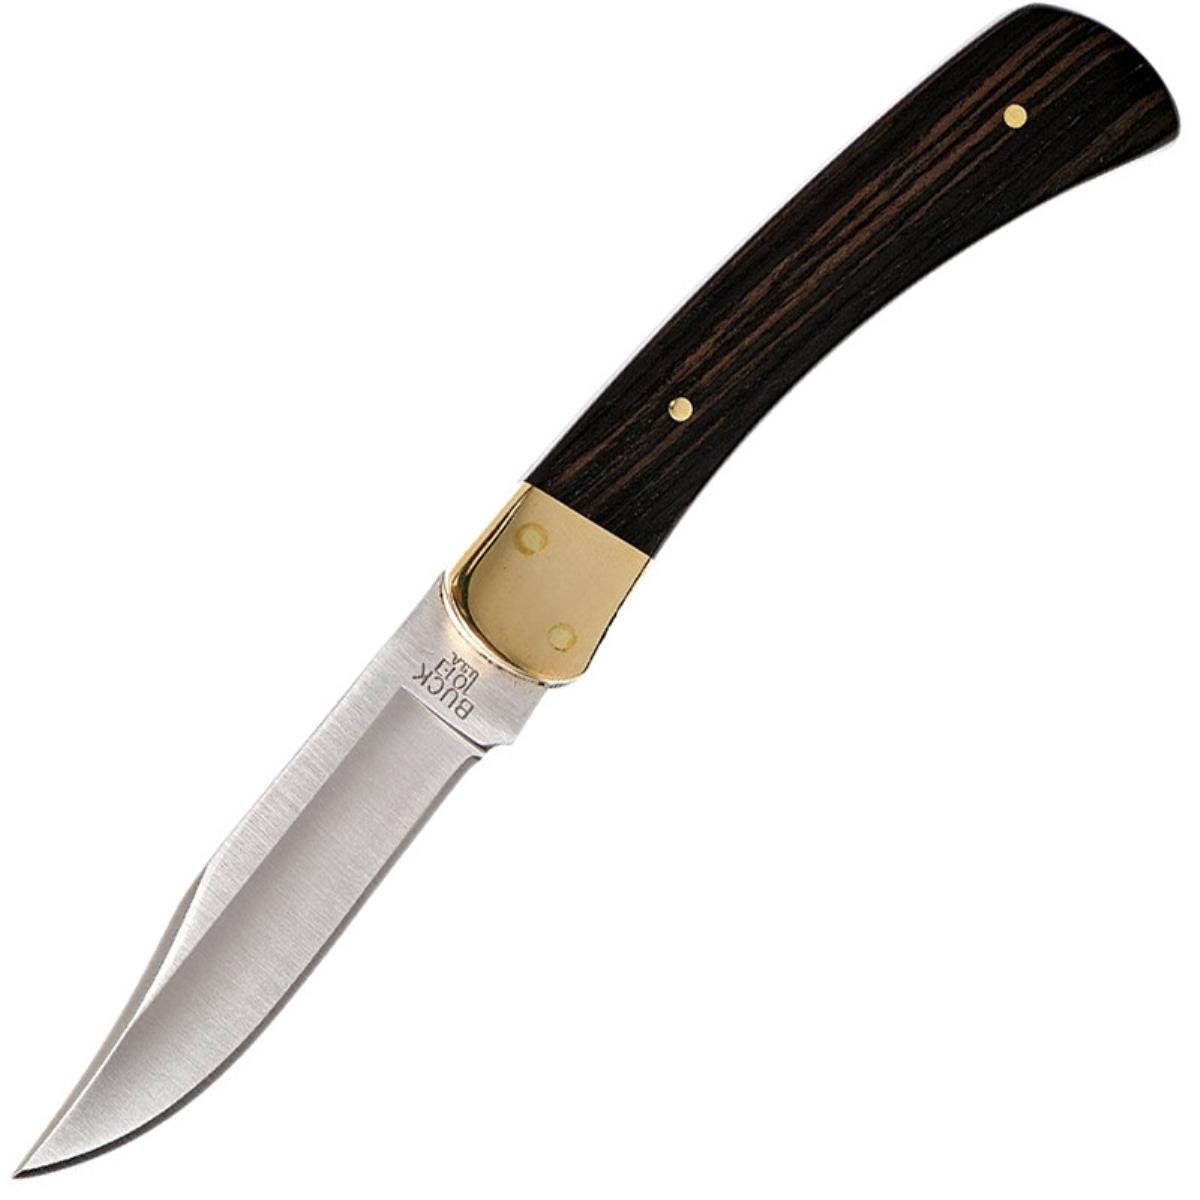 Нож сталь 420C B0101BRS Hunter Buck Knives нож сова кизляр сталь aus 8 sw